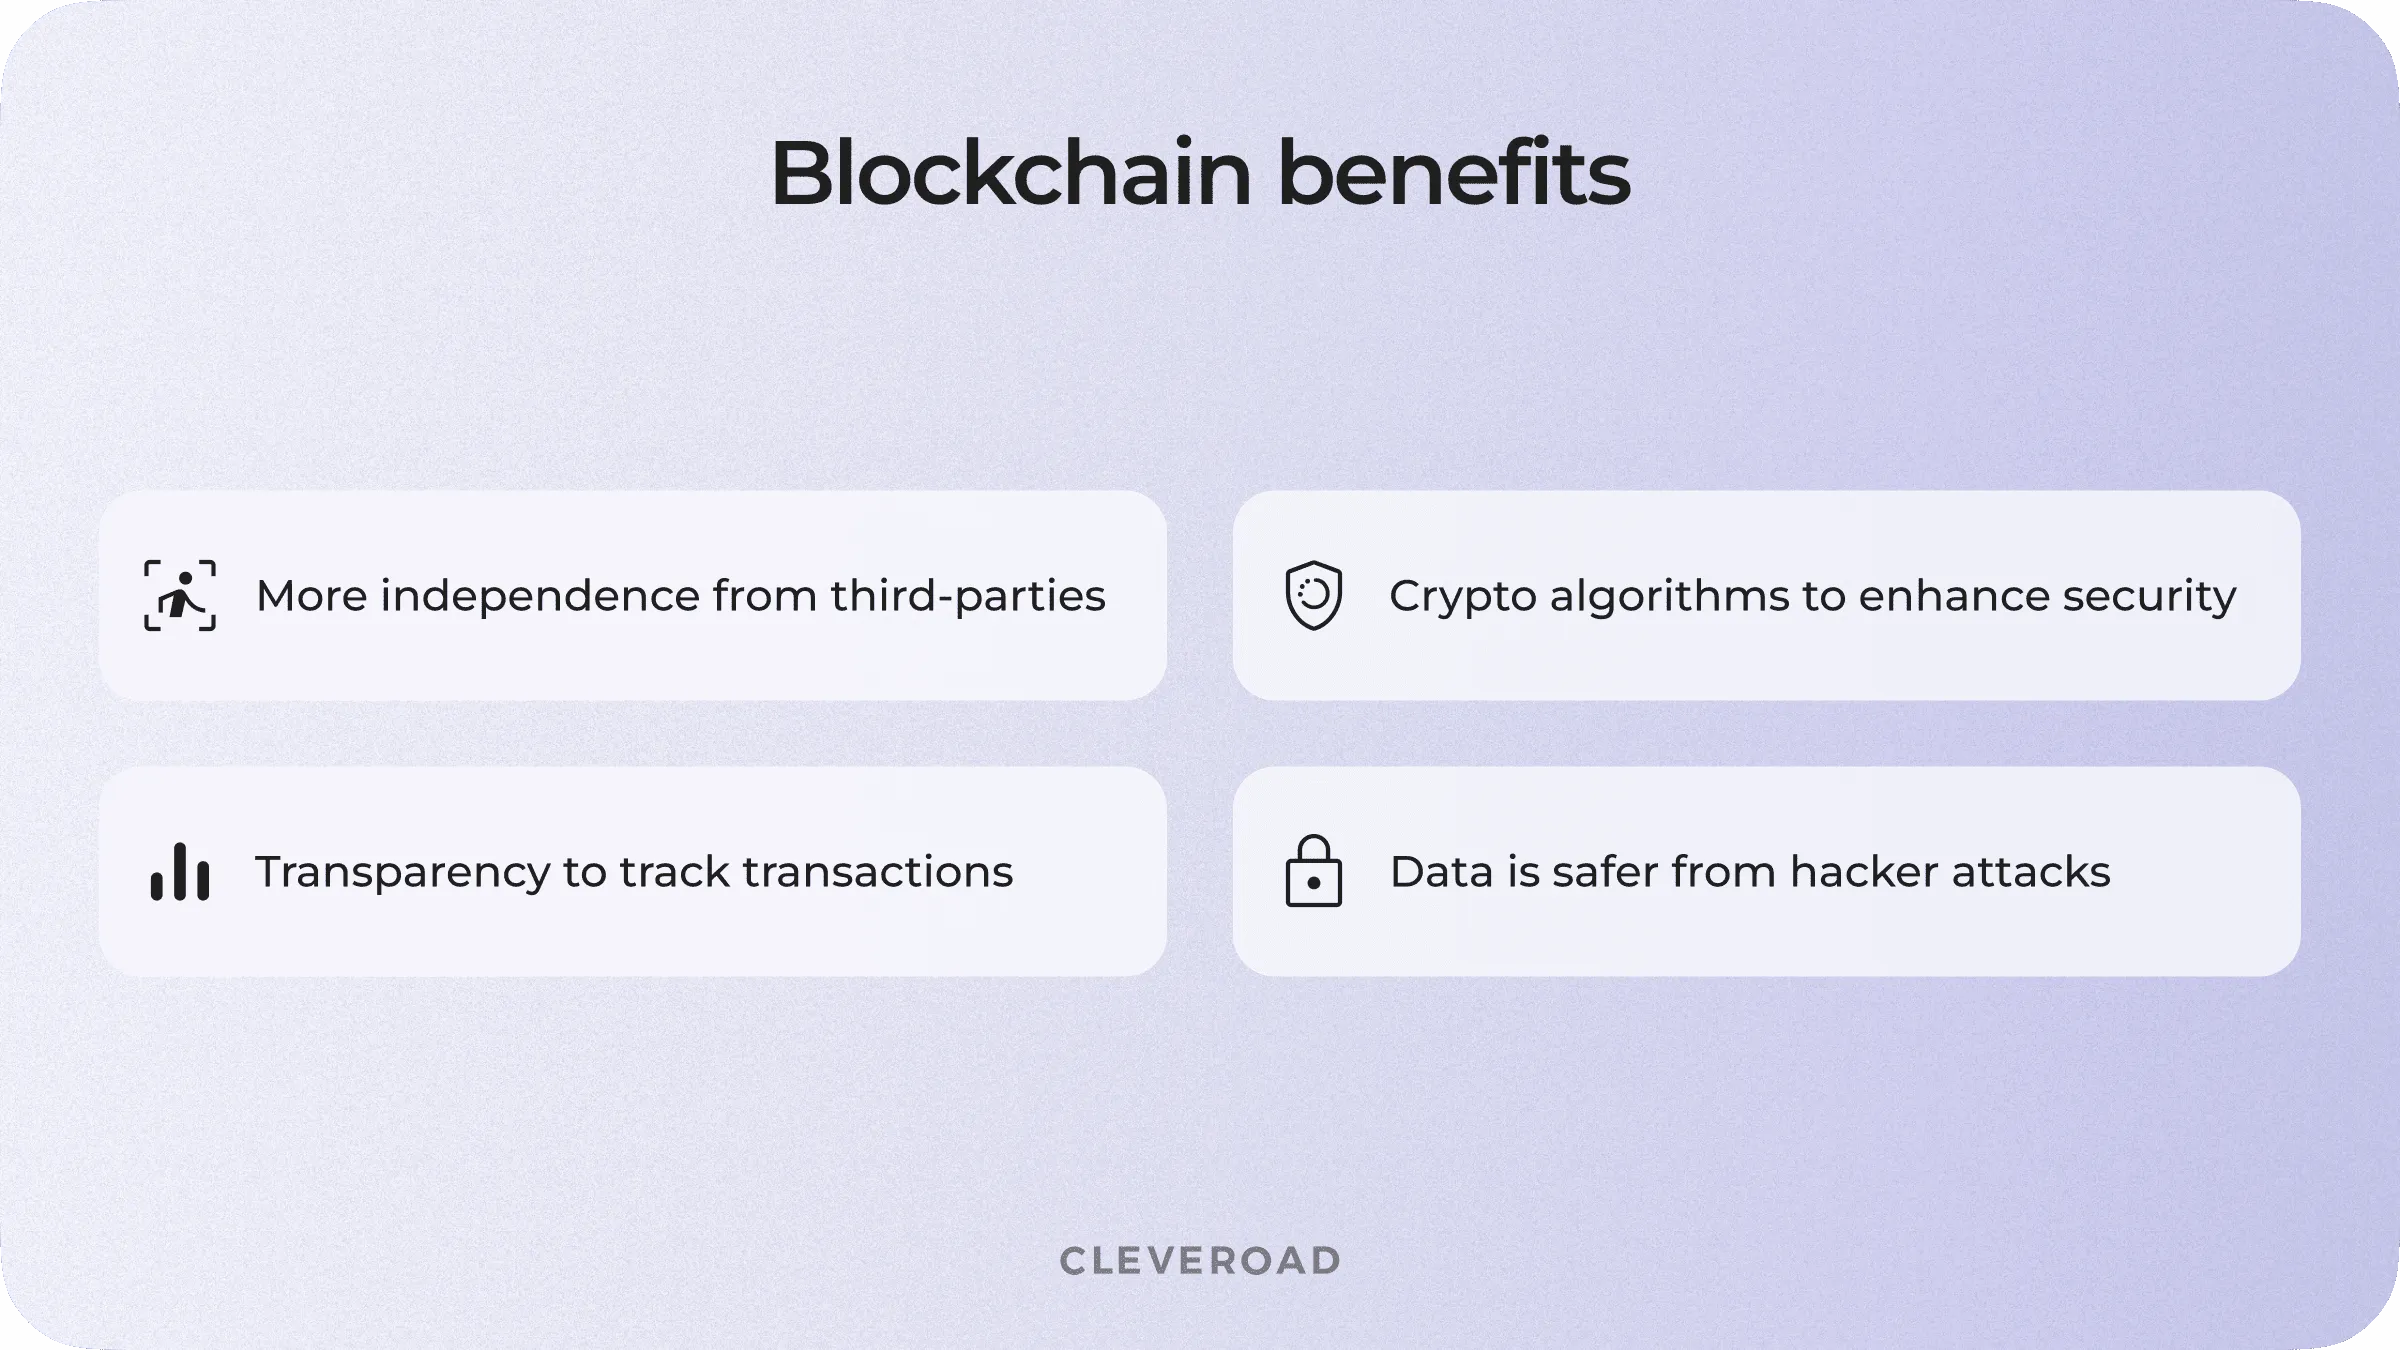 Benefits of blockchain